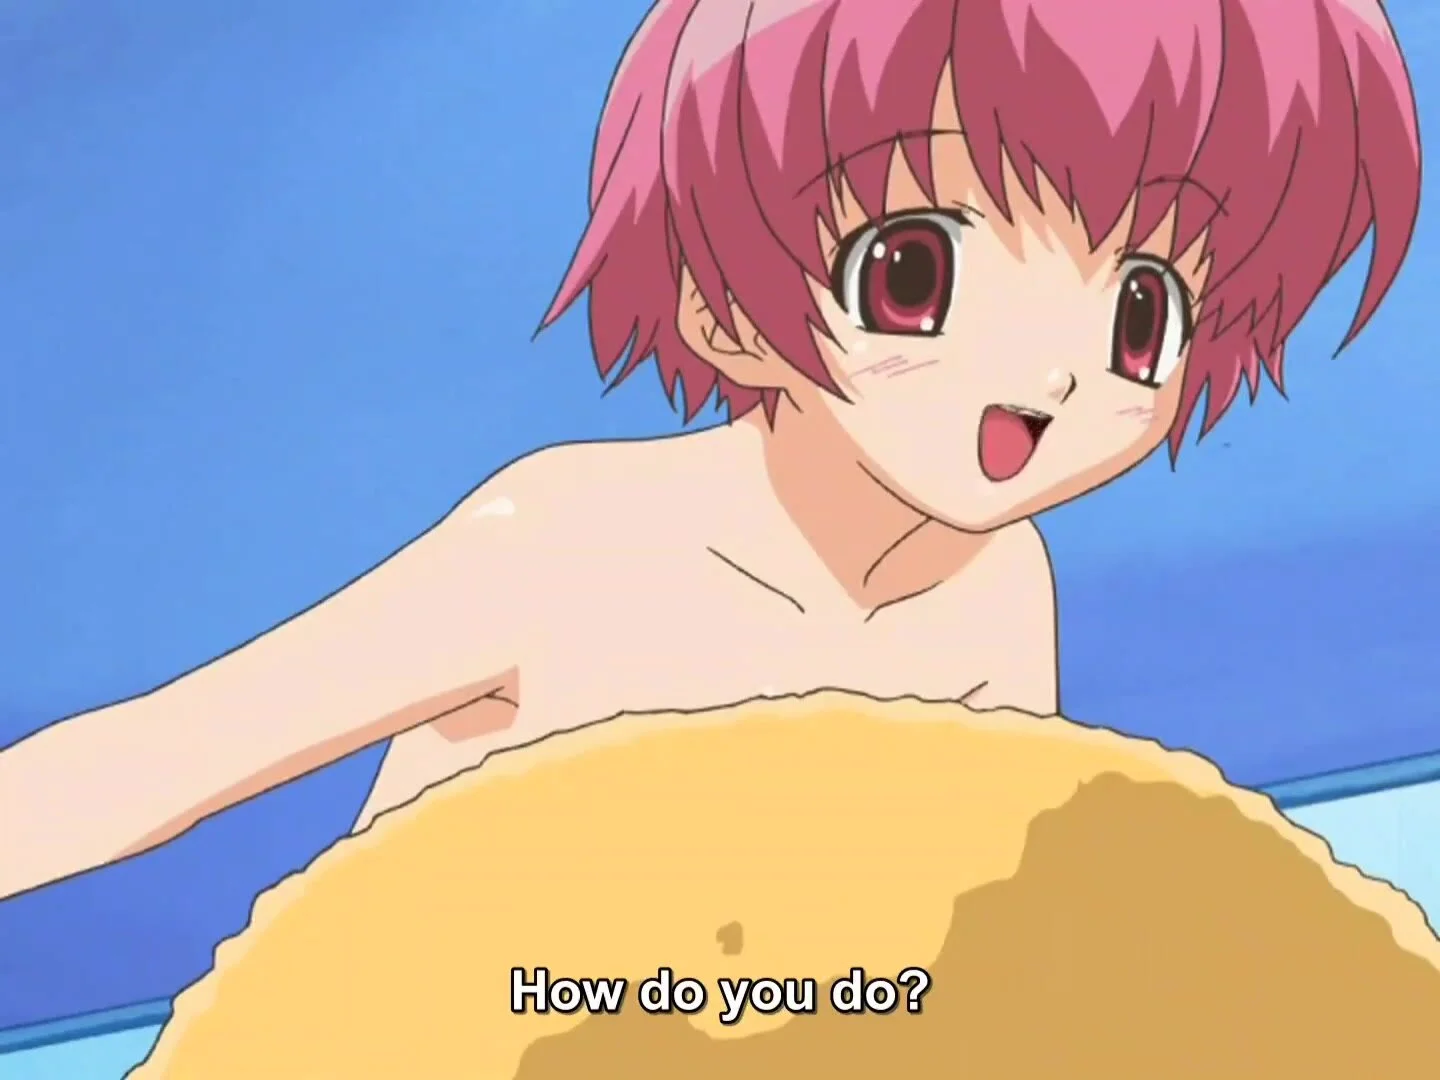 cyn ortega share young anime girls nude photos